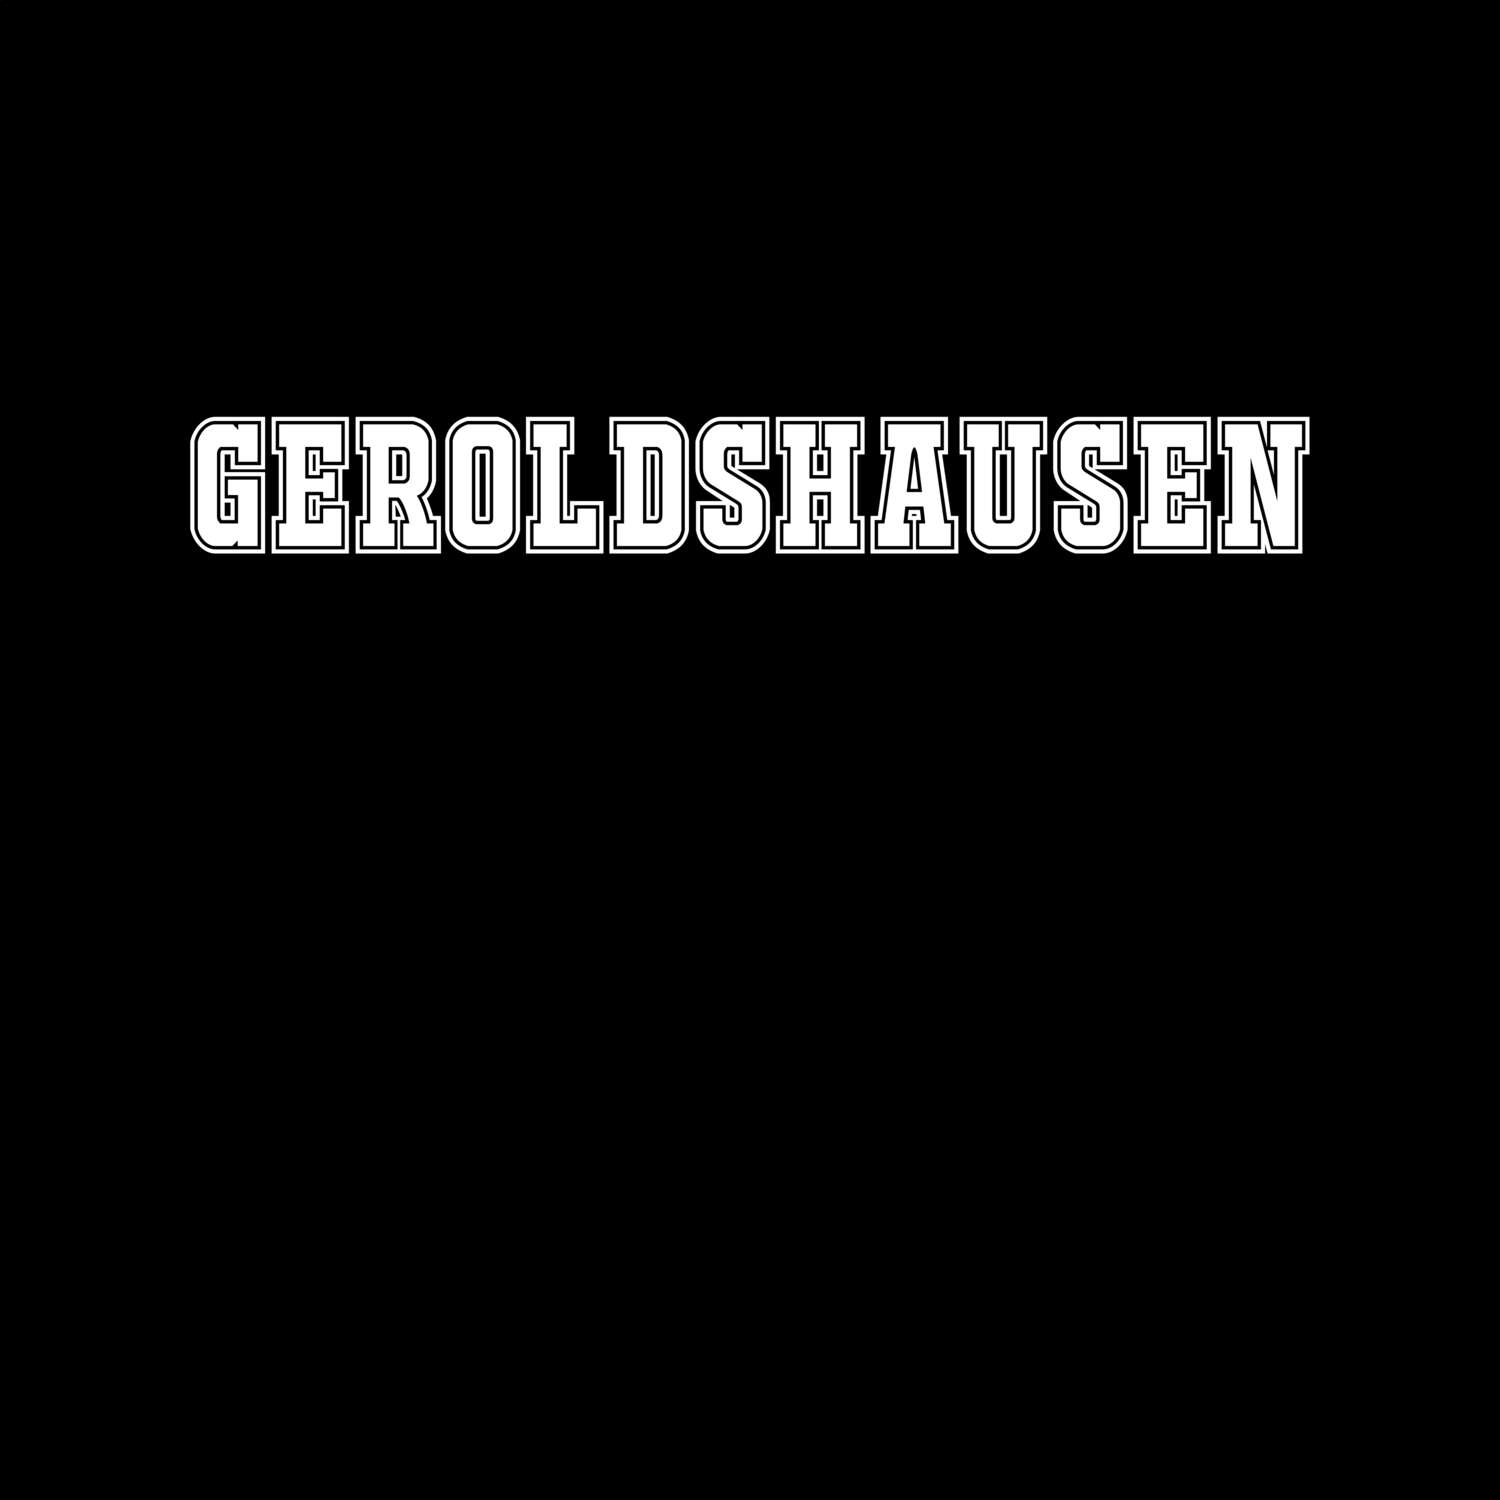 Geroldshausen T-Shirt »Classic«